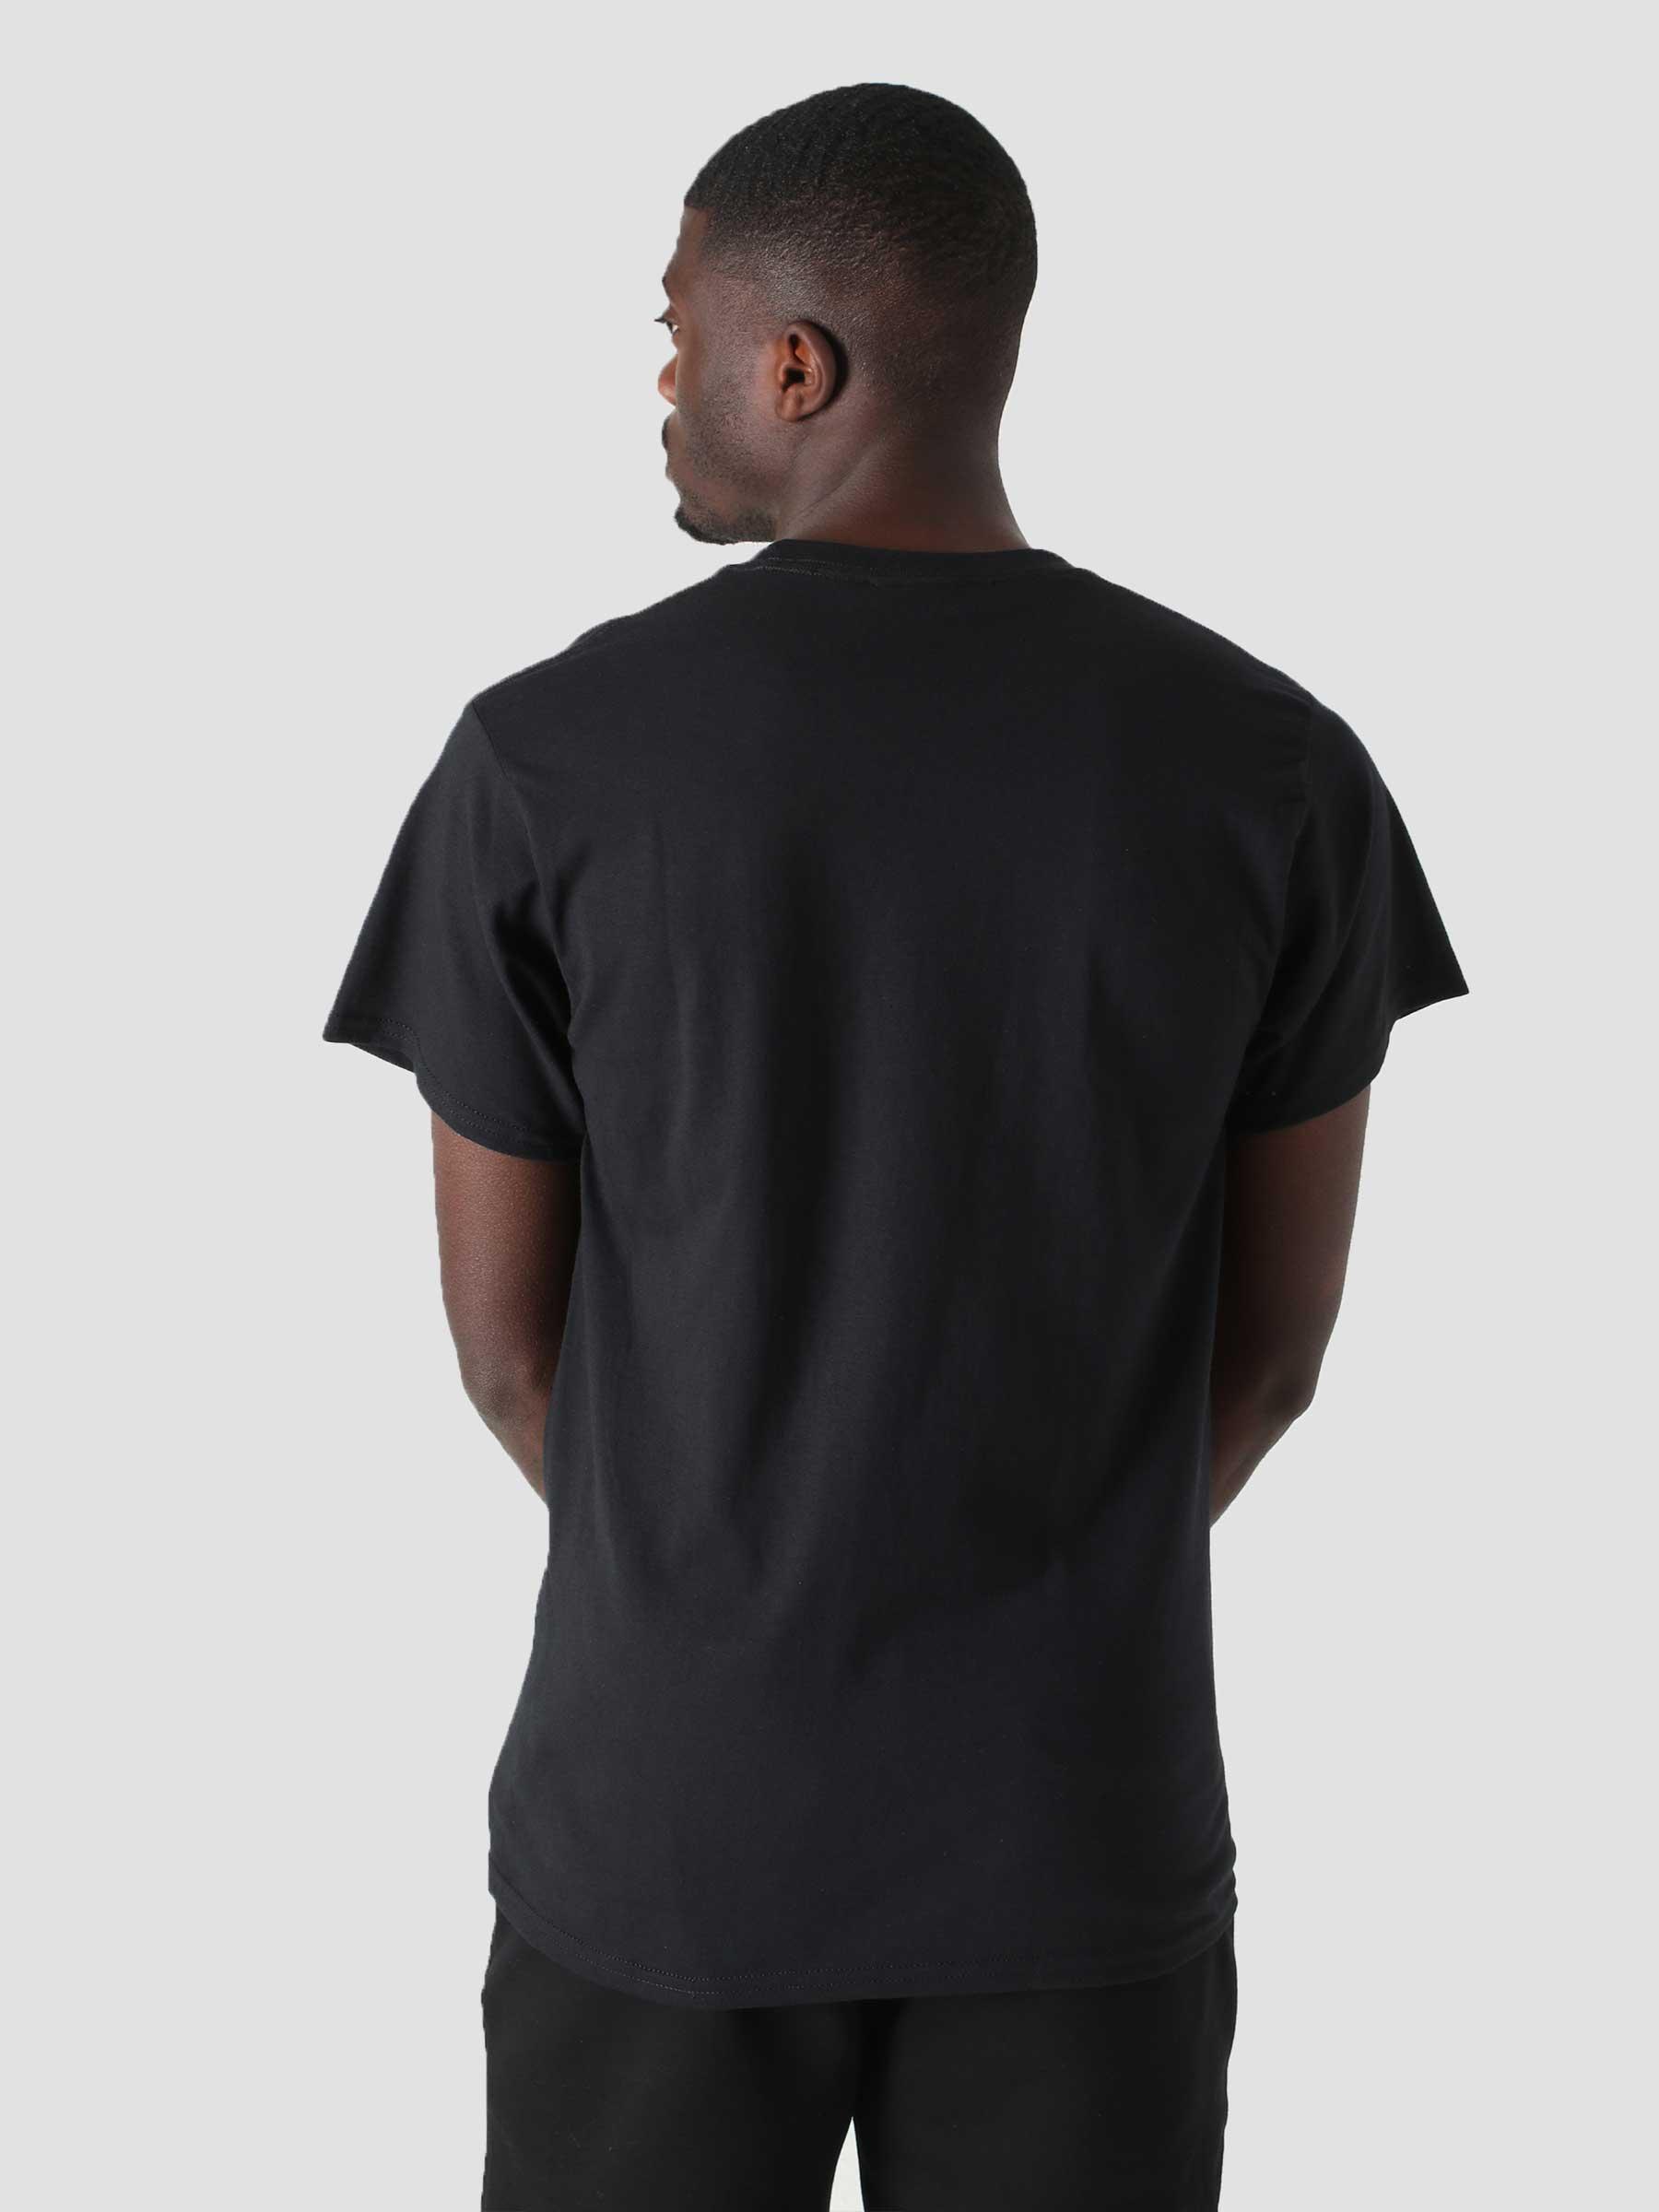 Global Warning T-Shirt Black TS01520-BLACK